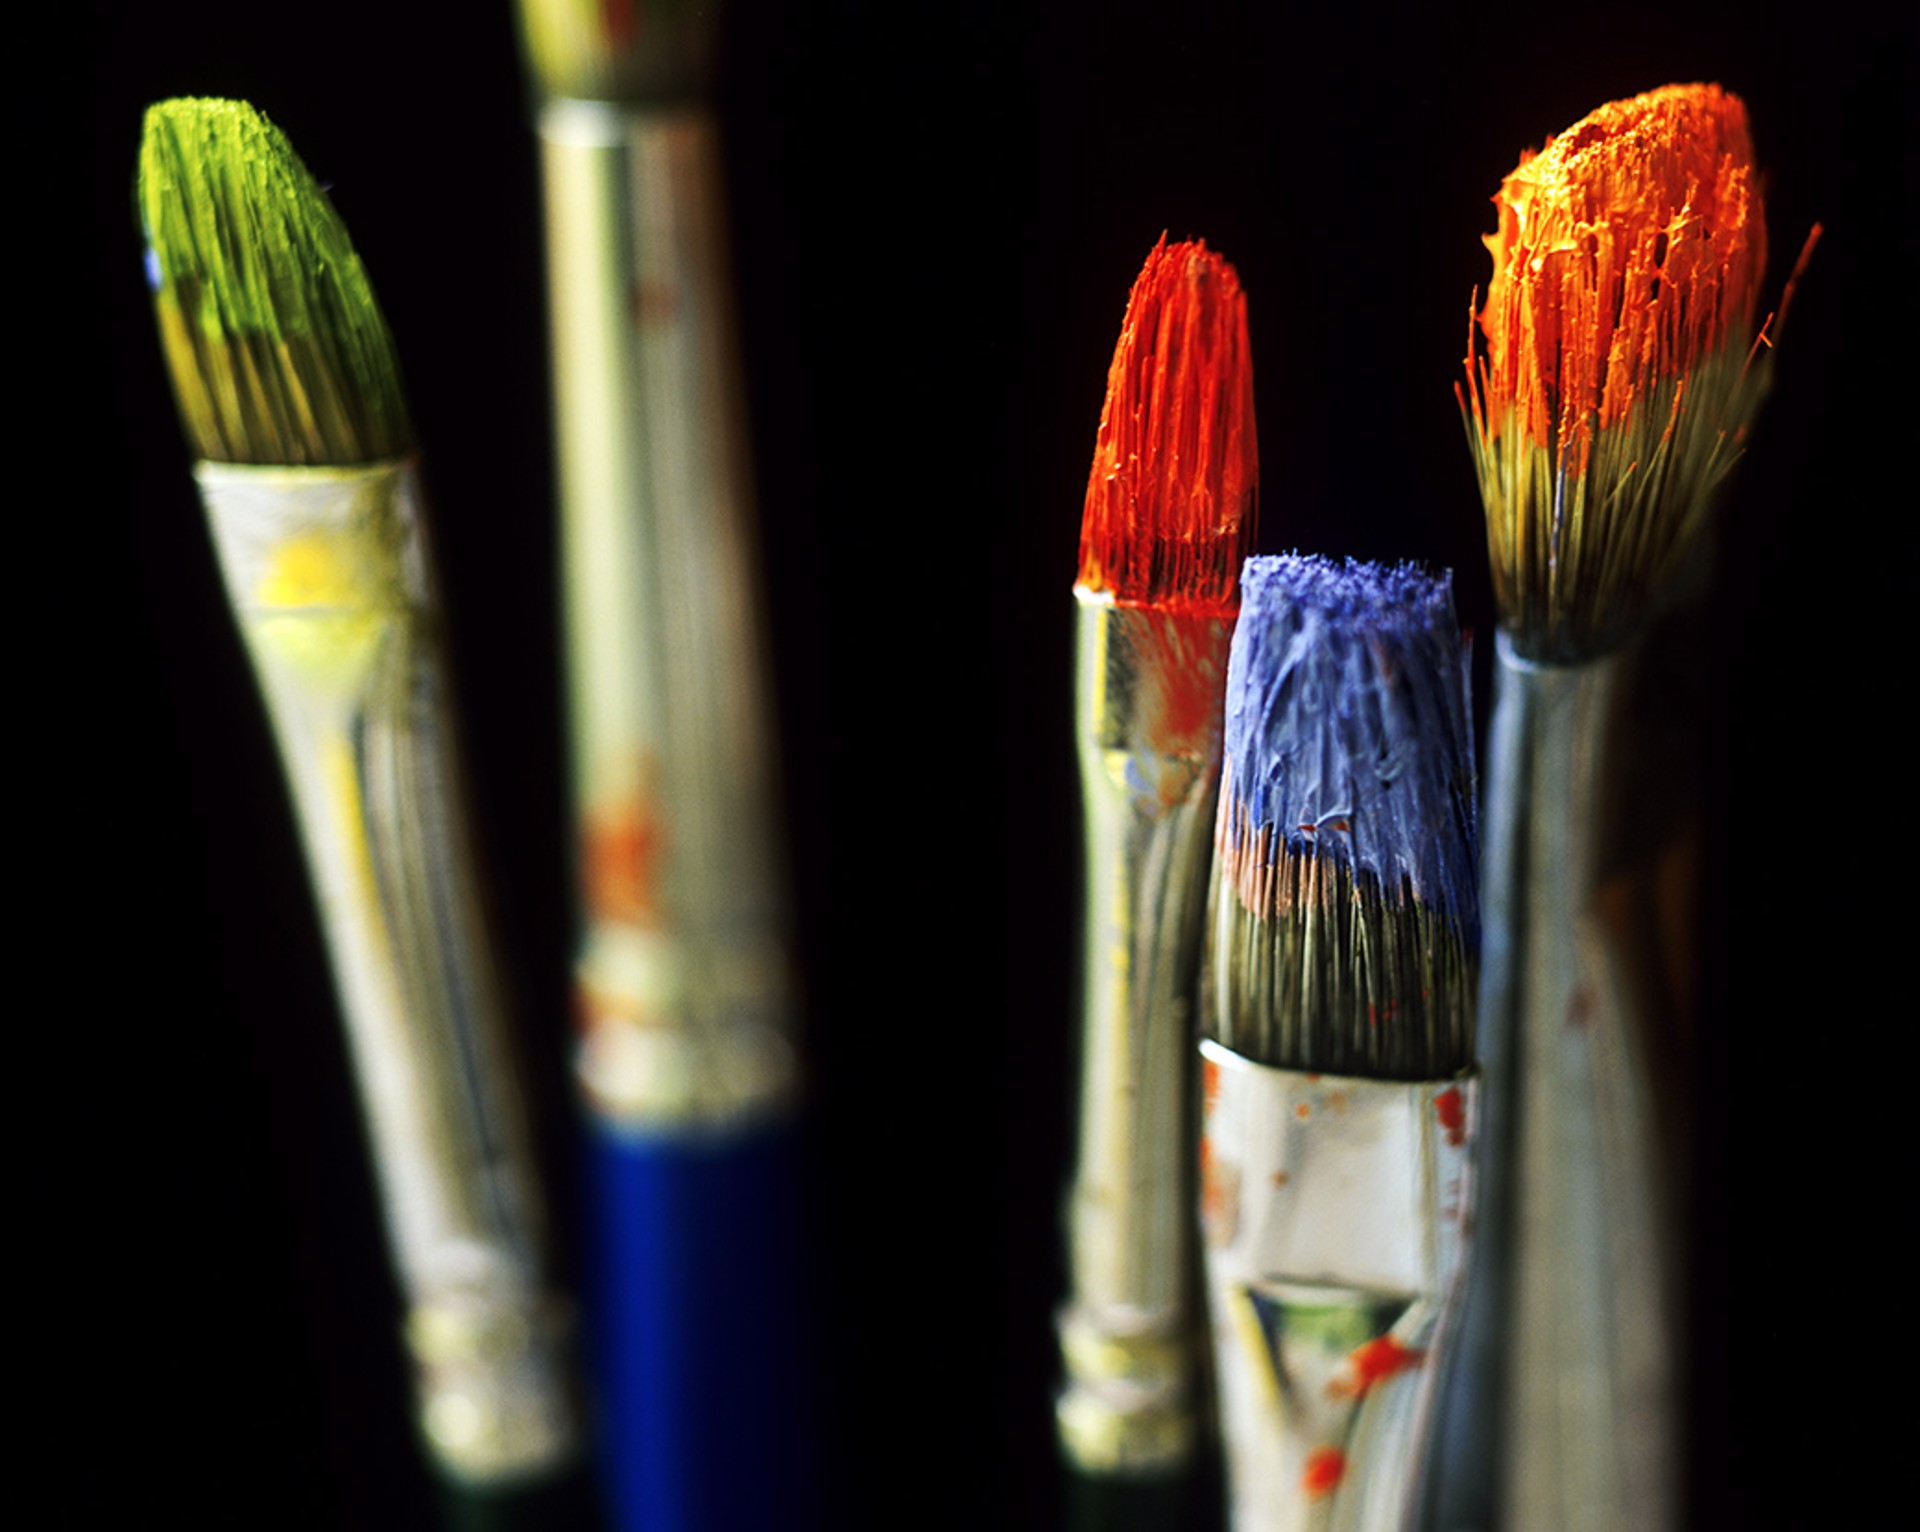 Brushes & Paint, Jeanne Staples Studio, Edgartown by Alison Shaw - Artist Studios